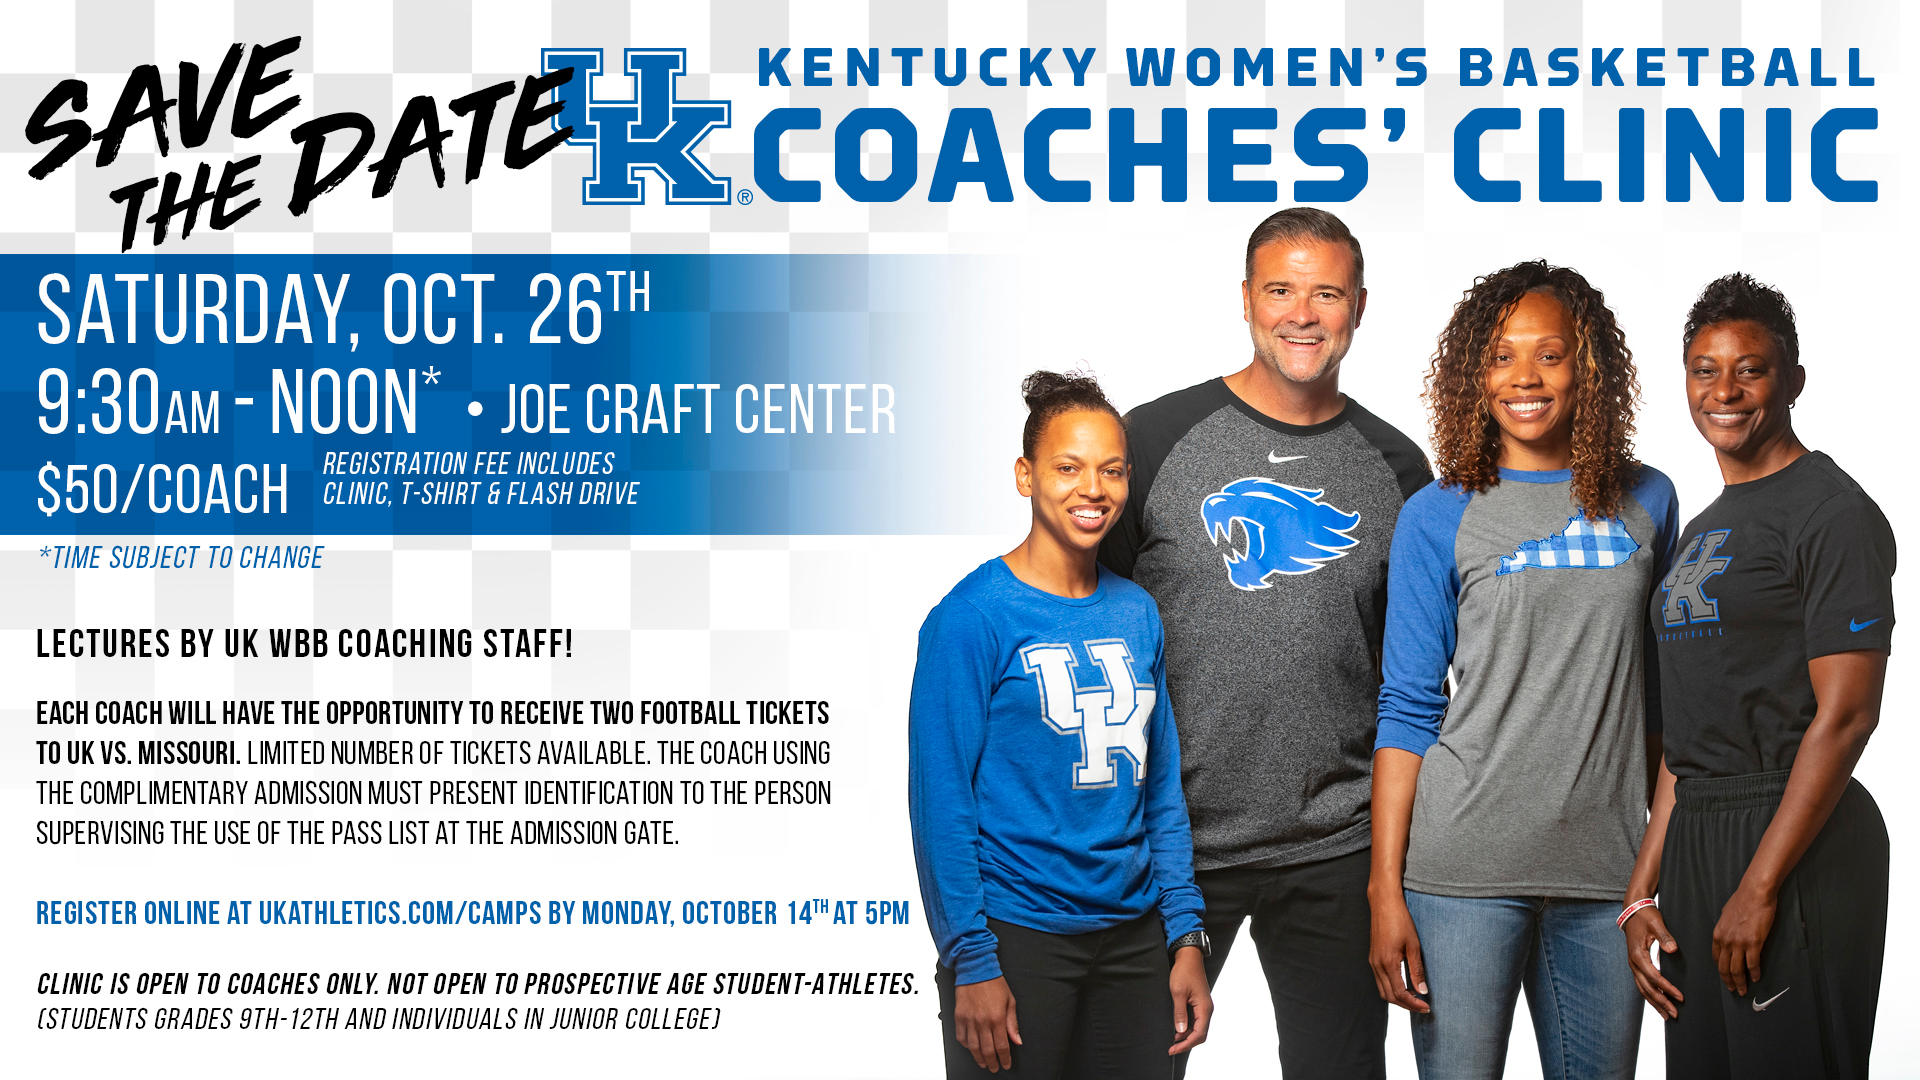 2019 Kentucky Women's Basketball Coaches Clinic